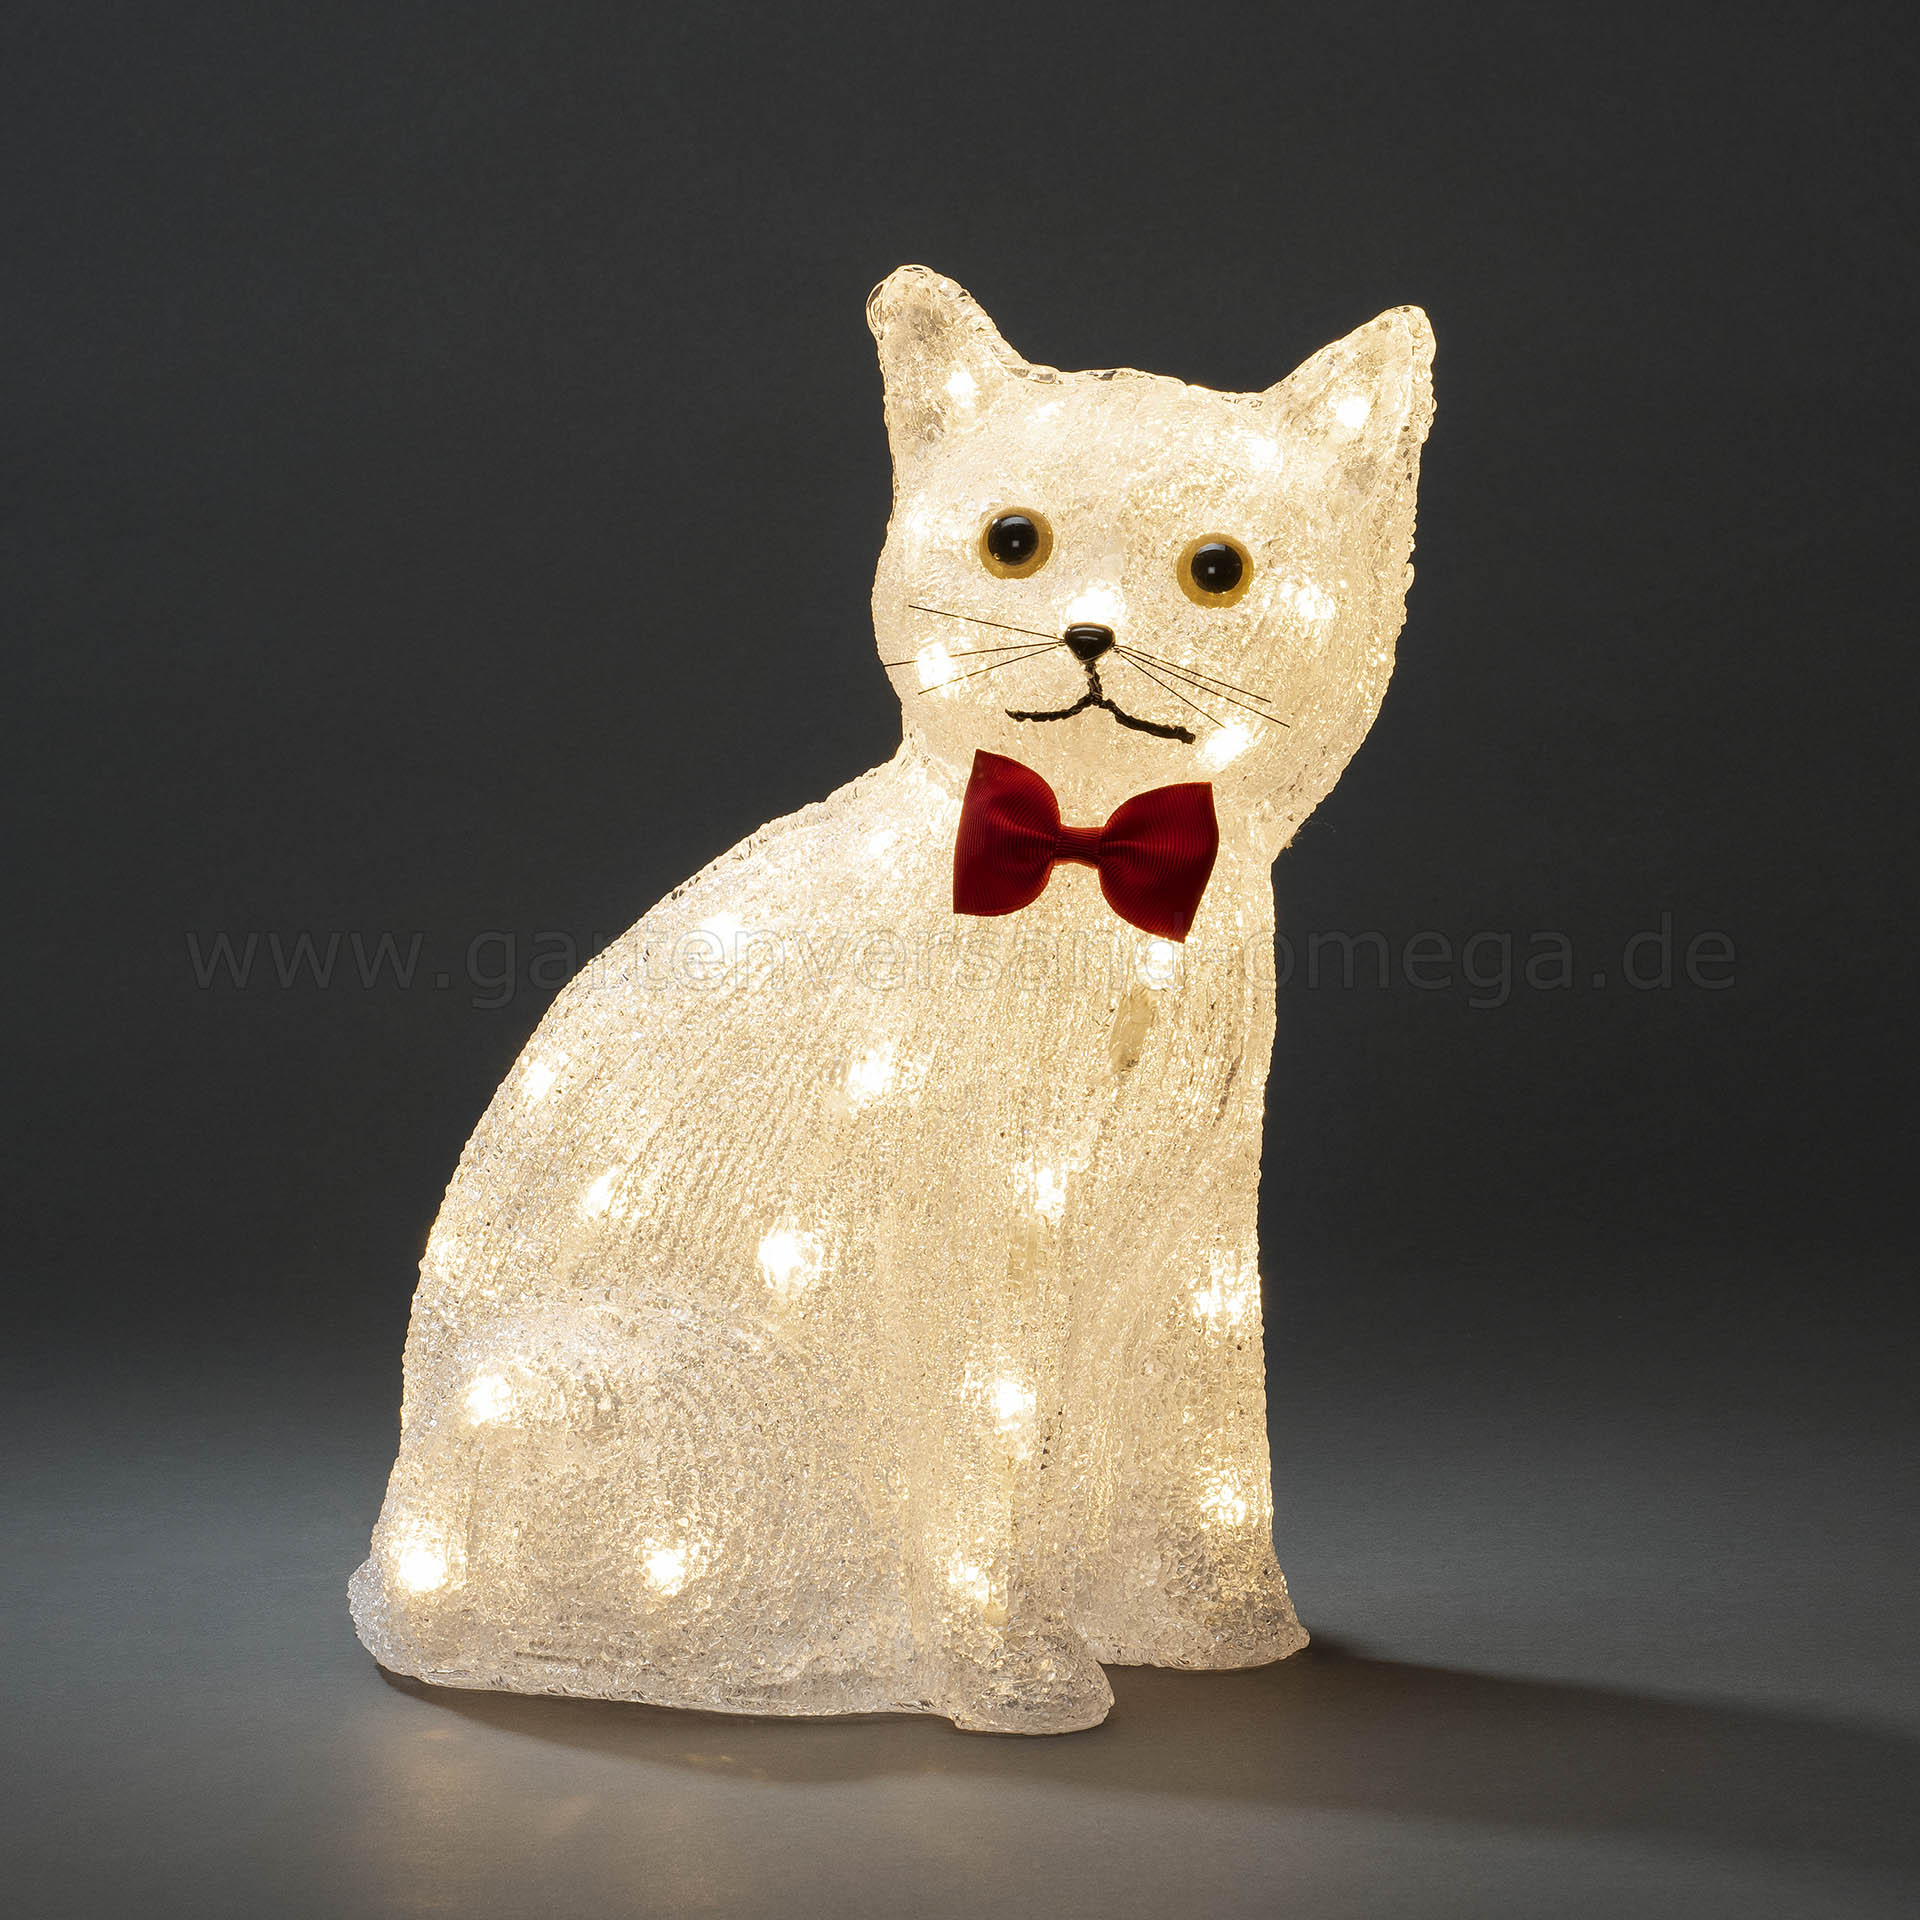 - Katze LED-Katze, Weihnachtsdekoration beleuchtet, LED Leuchtdekoration Acrylfigur Katze, LED-Acryl Deko Katze, sitzend Katze Katzenfigur beleuchtet, Weihnachtsbeleuchtung Katze, Tierfiguren beleuchtet, Außen Figuren